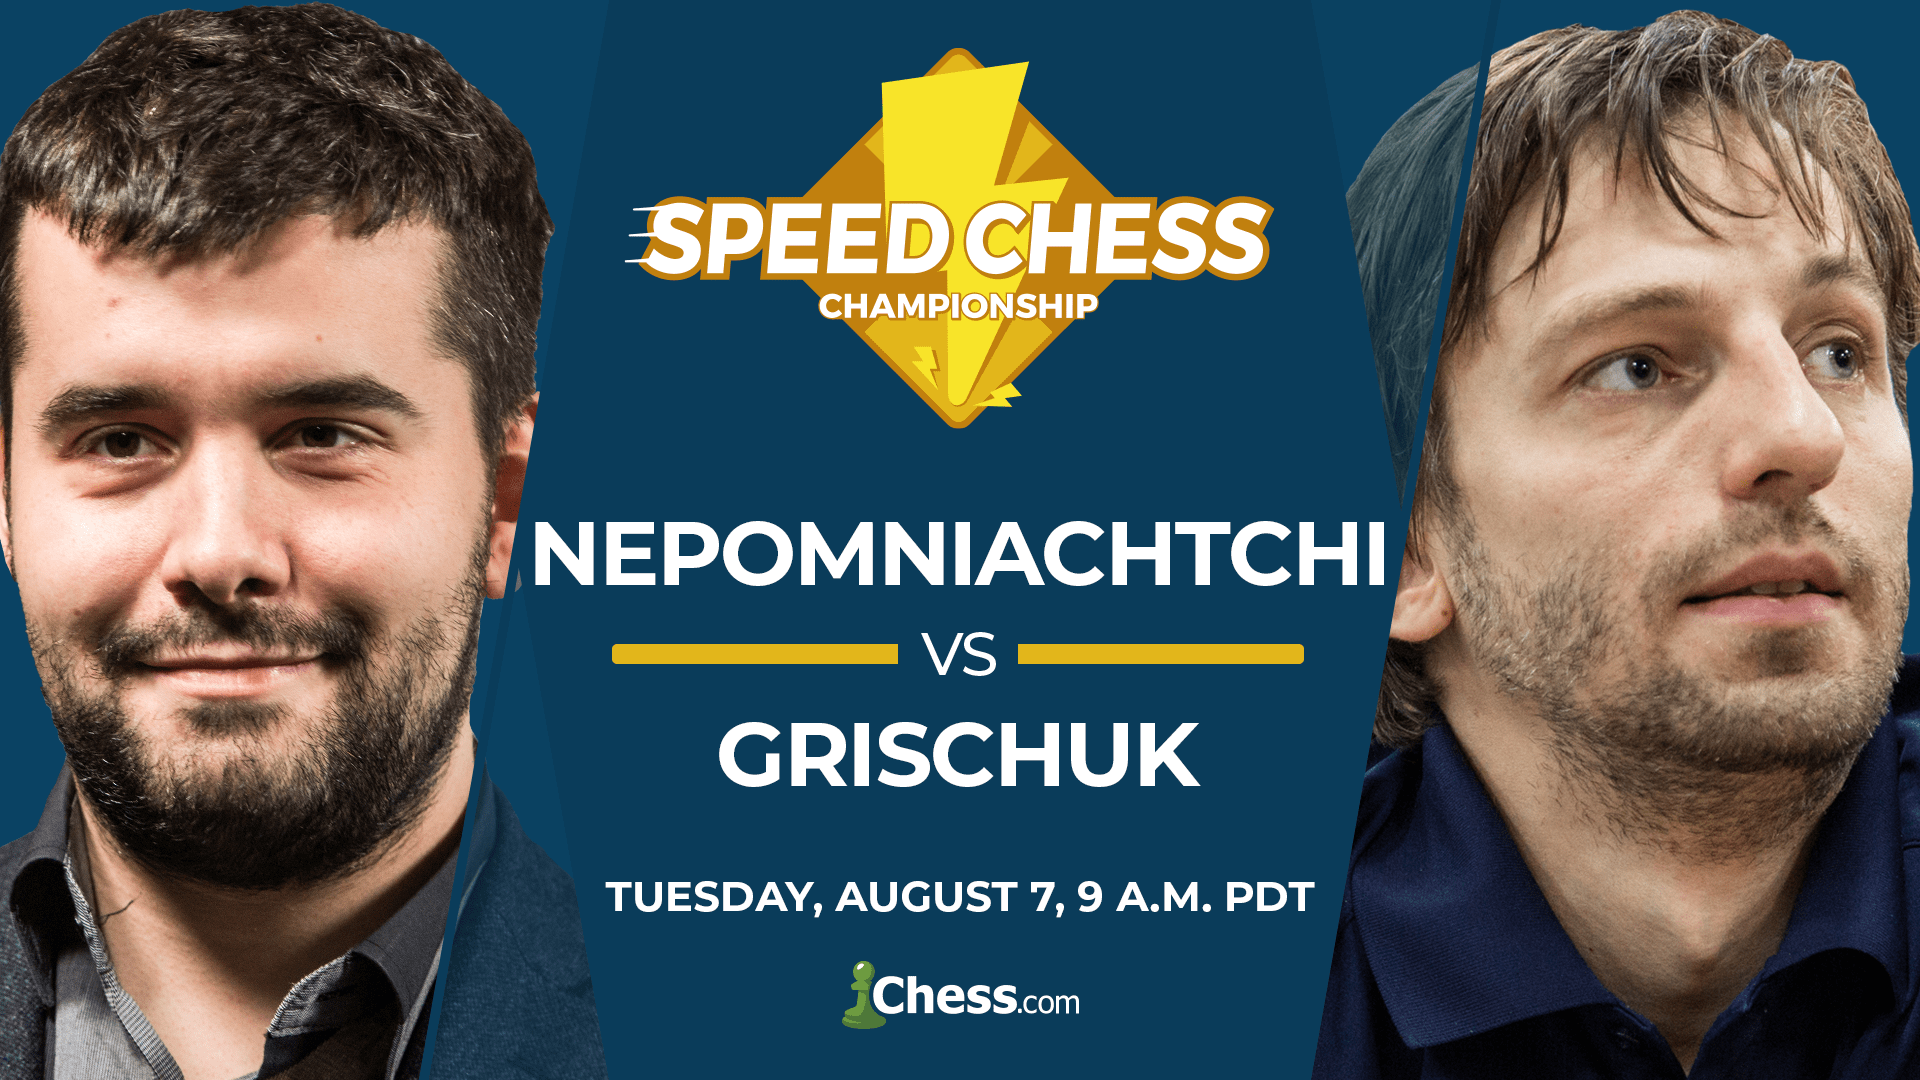 Russian Crushin' At Next Speed Chess Championship Match